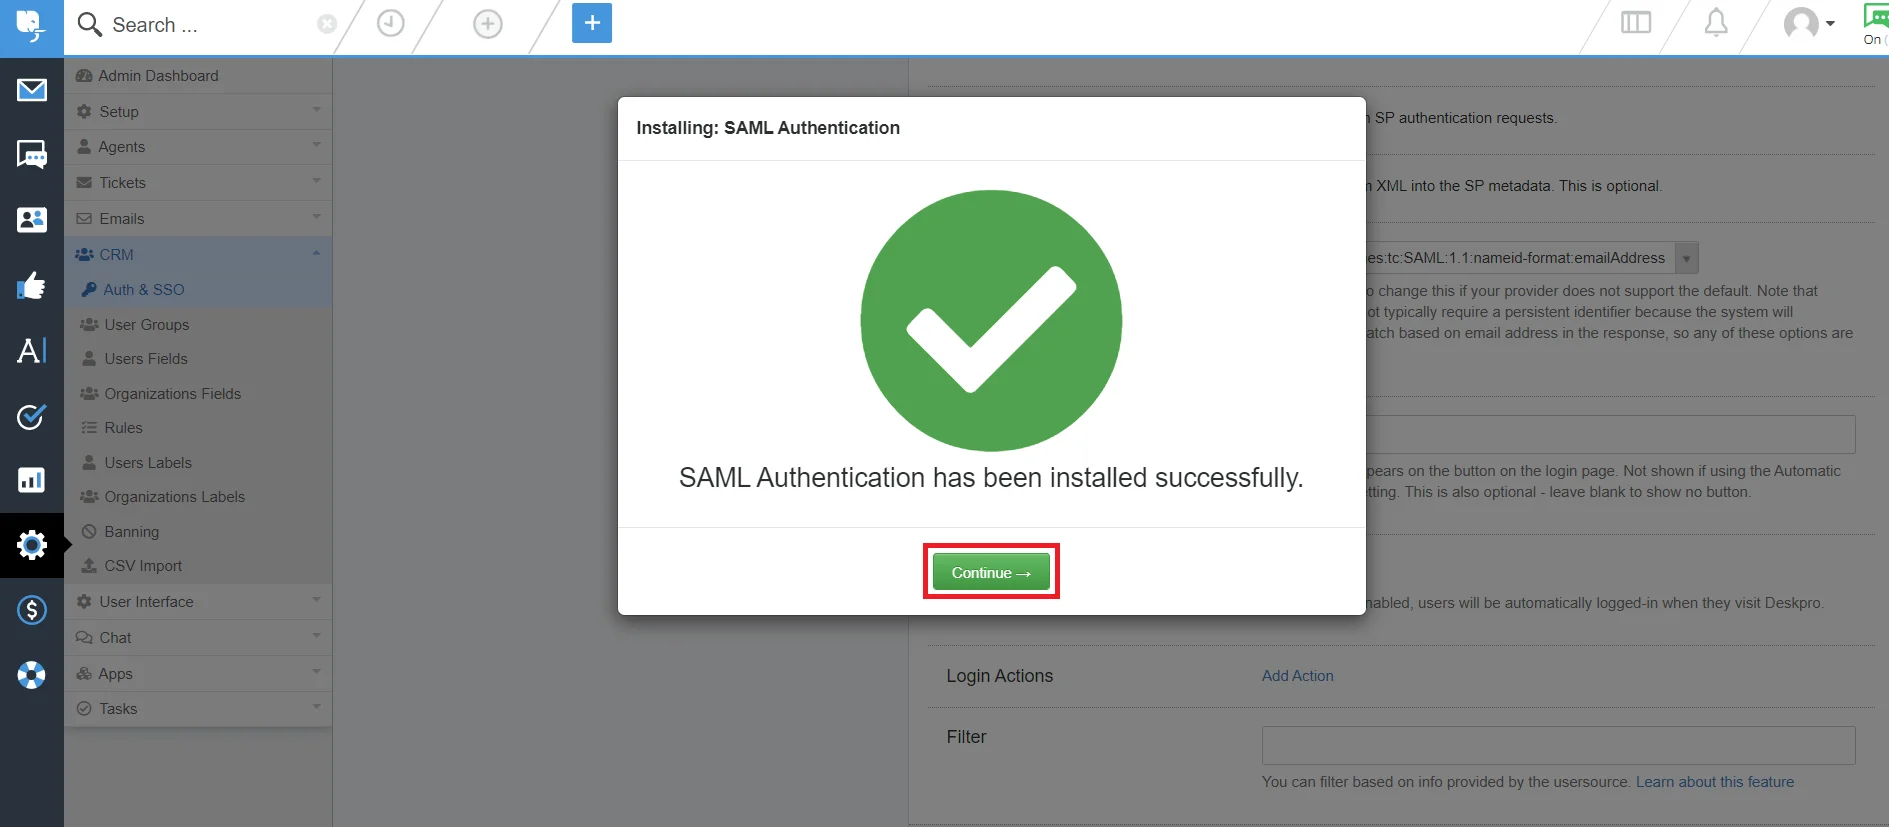 Deskpro SAML SSO integration with Joomla as Identity Provider